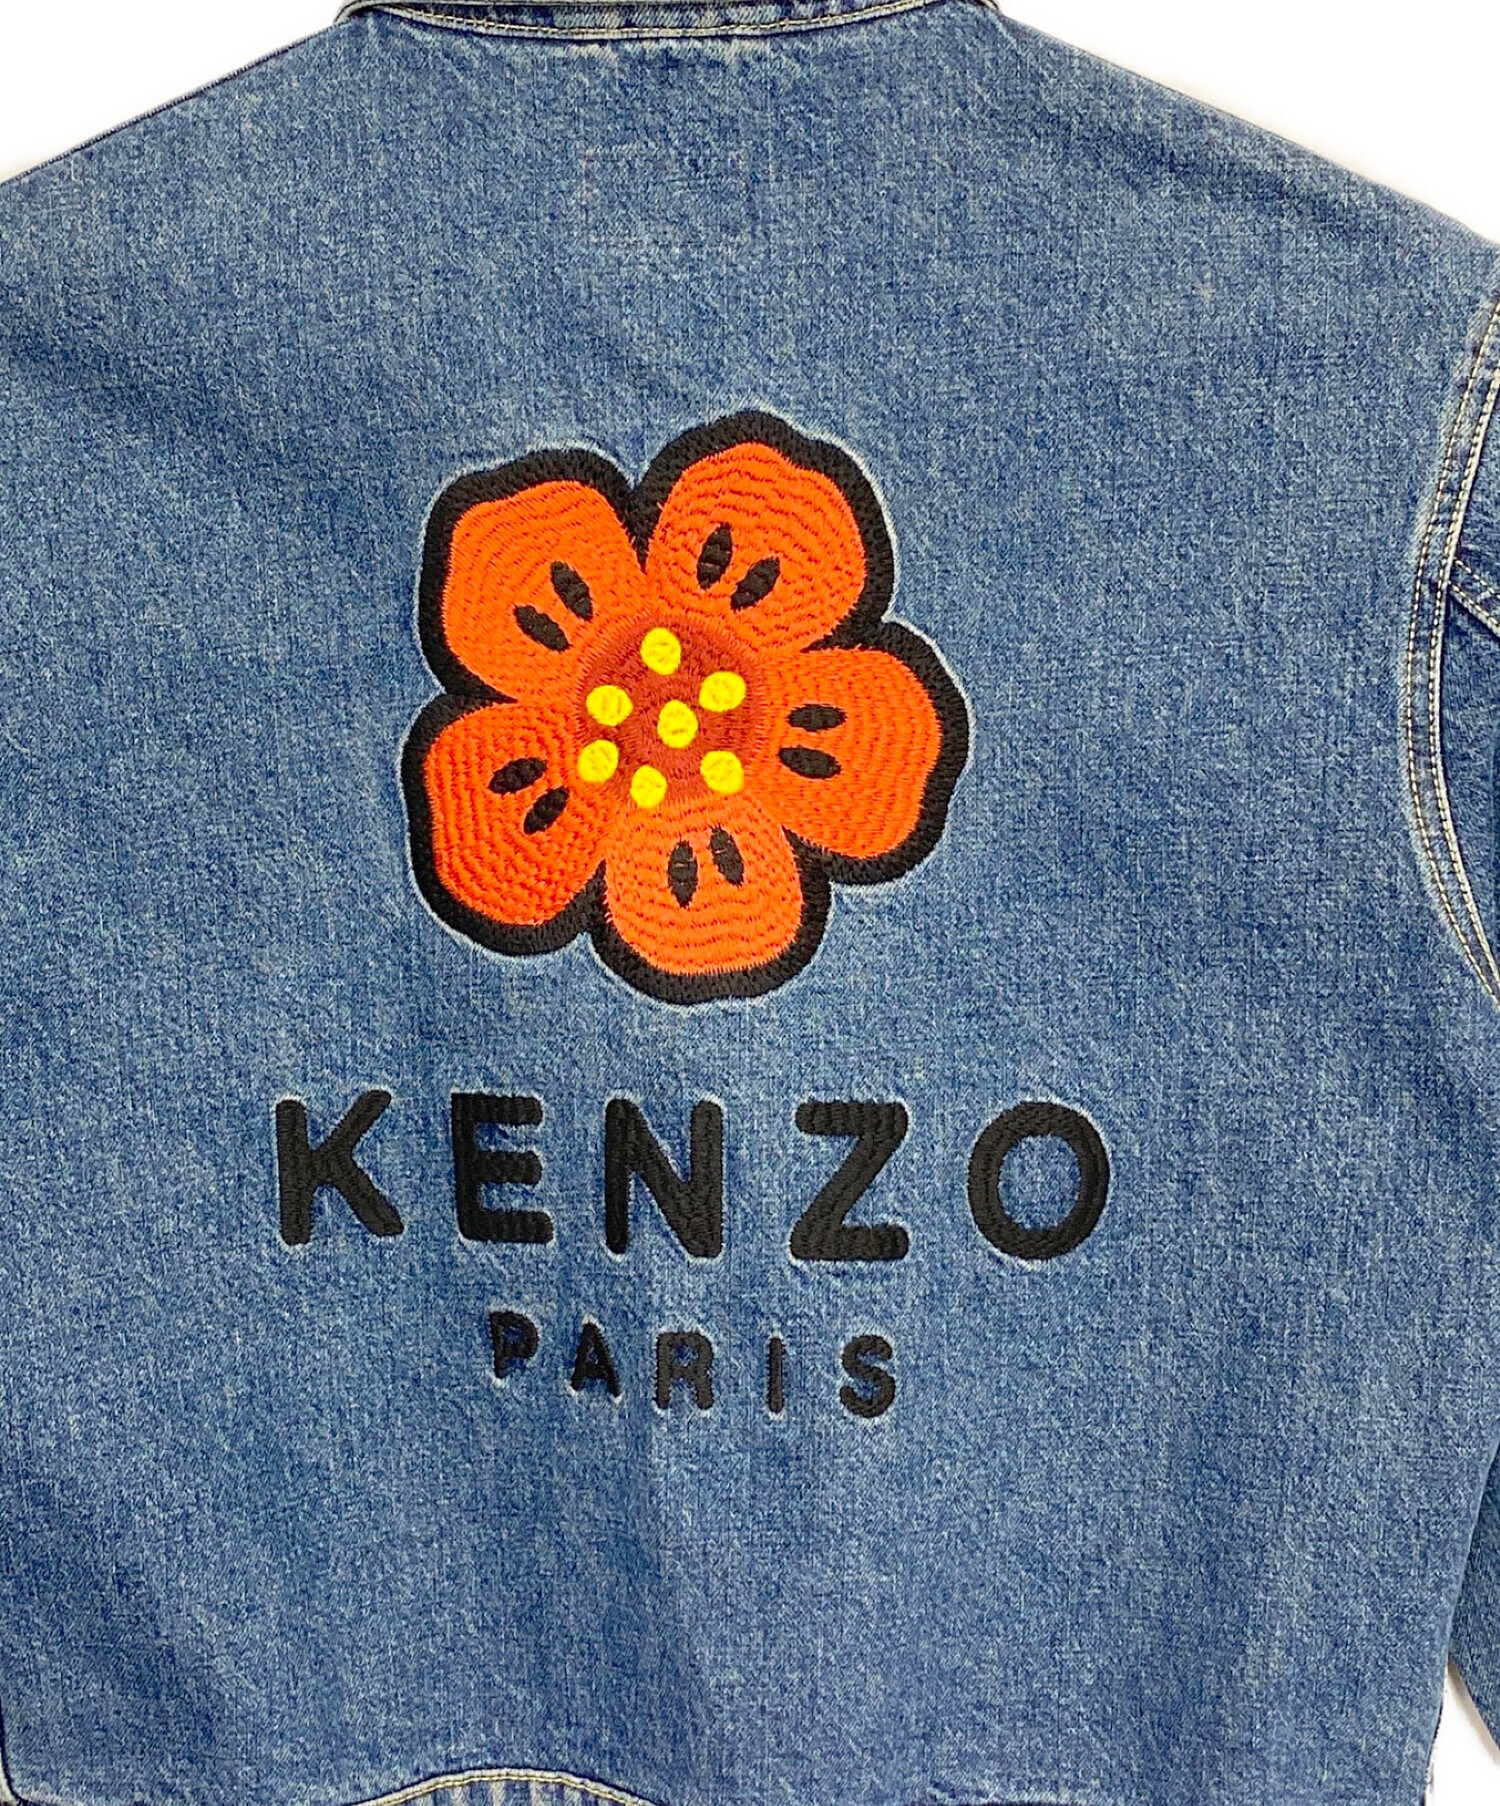 KENZO (ケンゾー) Boke Flower Embroidered Denim Trucker Jacket インディゴ サイズ:L